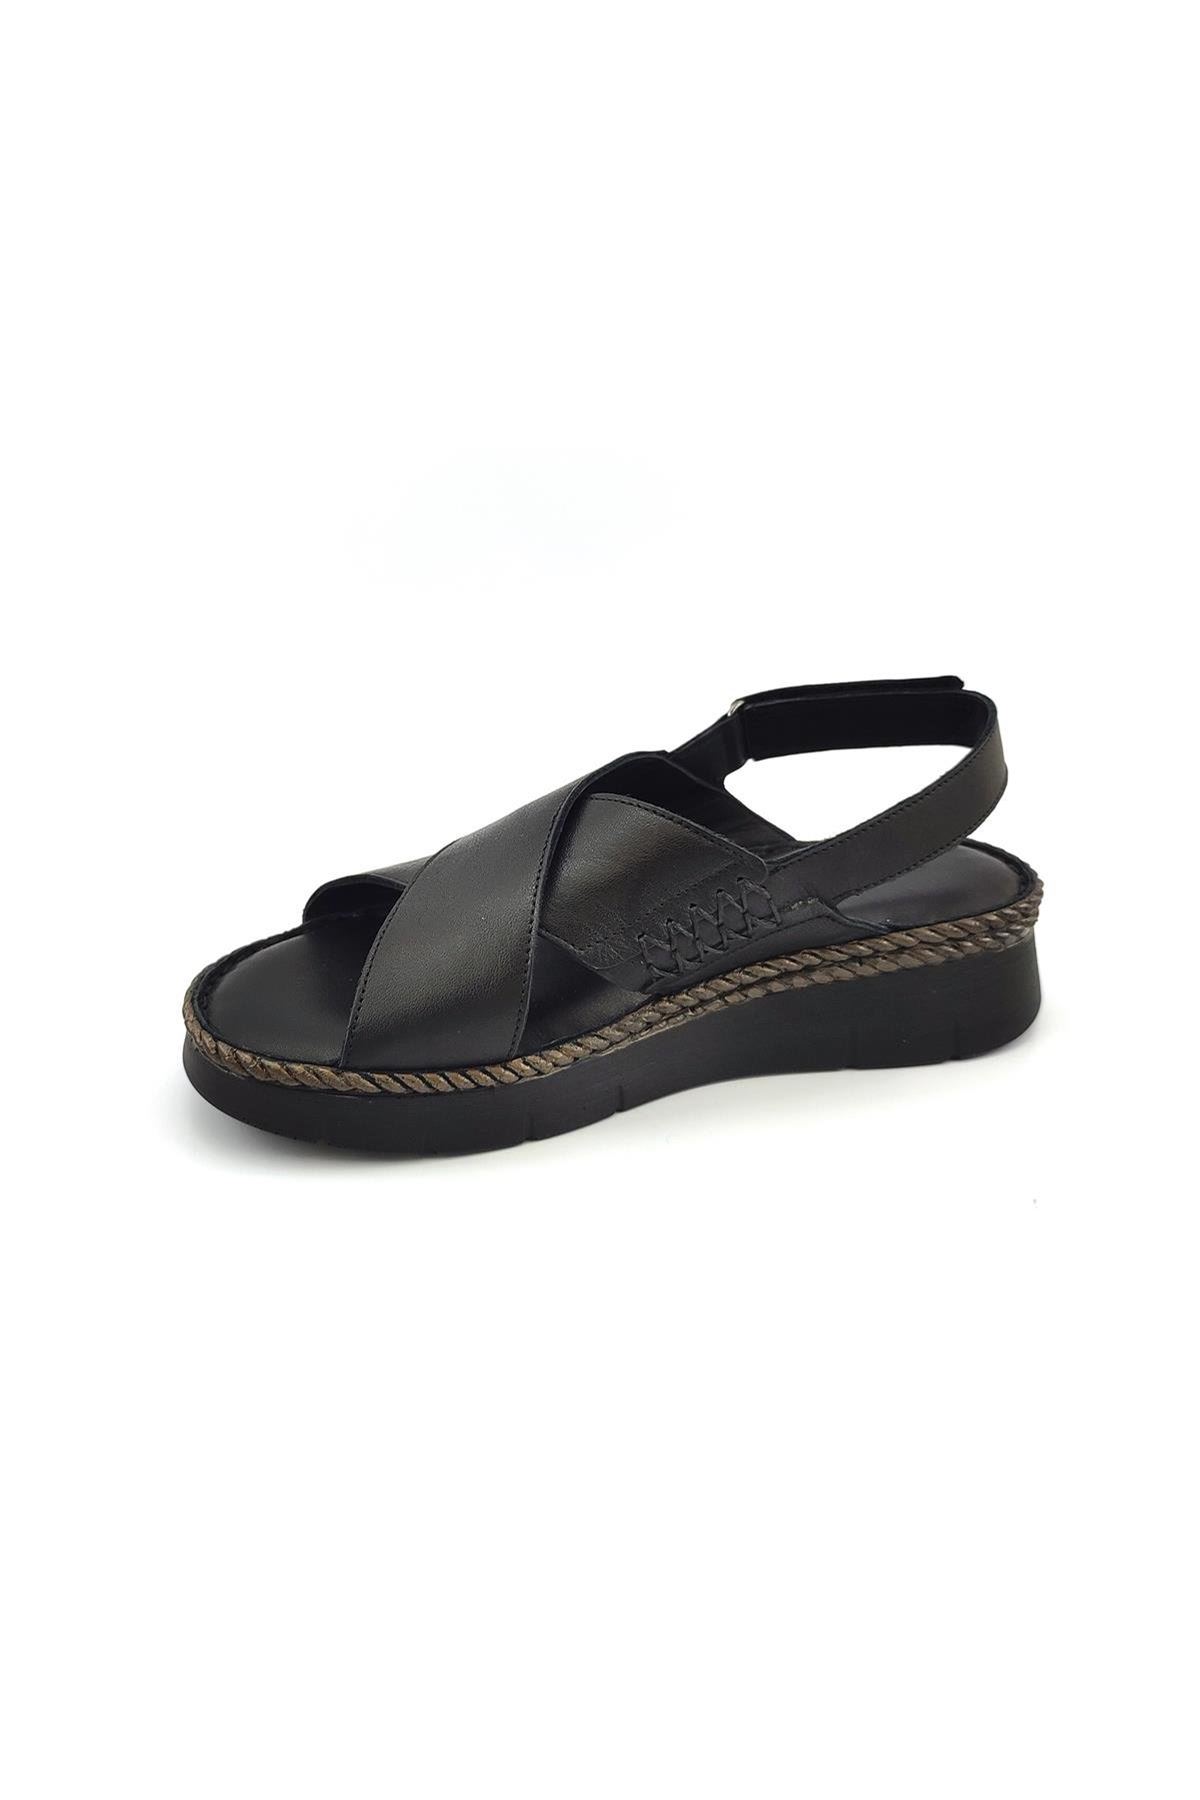 Mammamia D23YS-1200 Deri Comfort Kadın Sandalet - Siyah